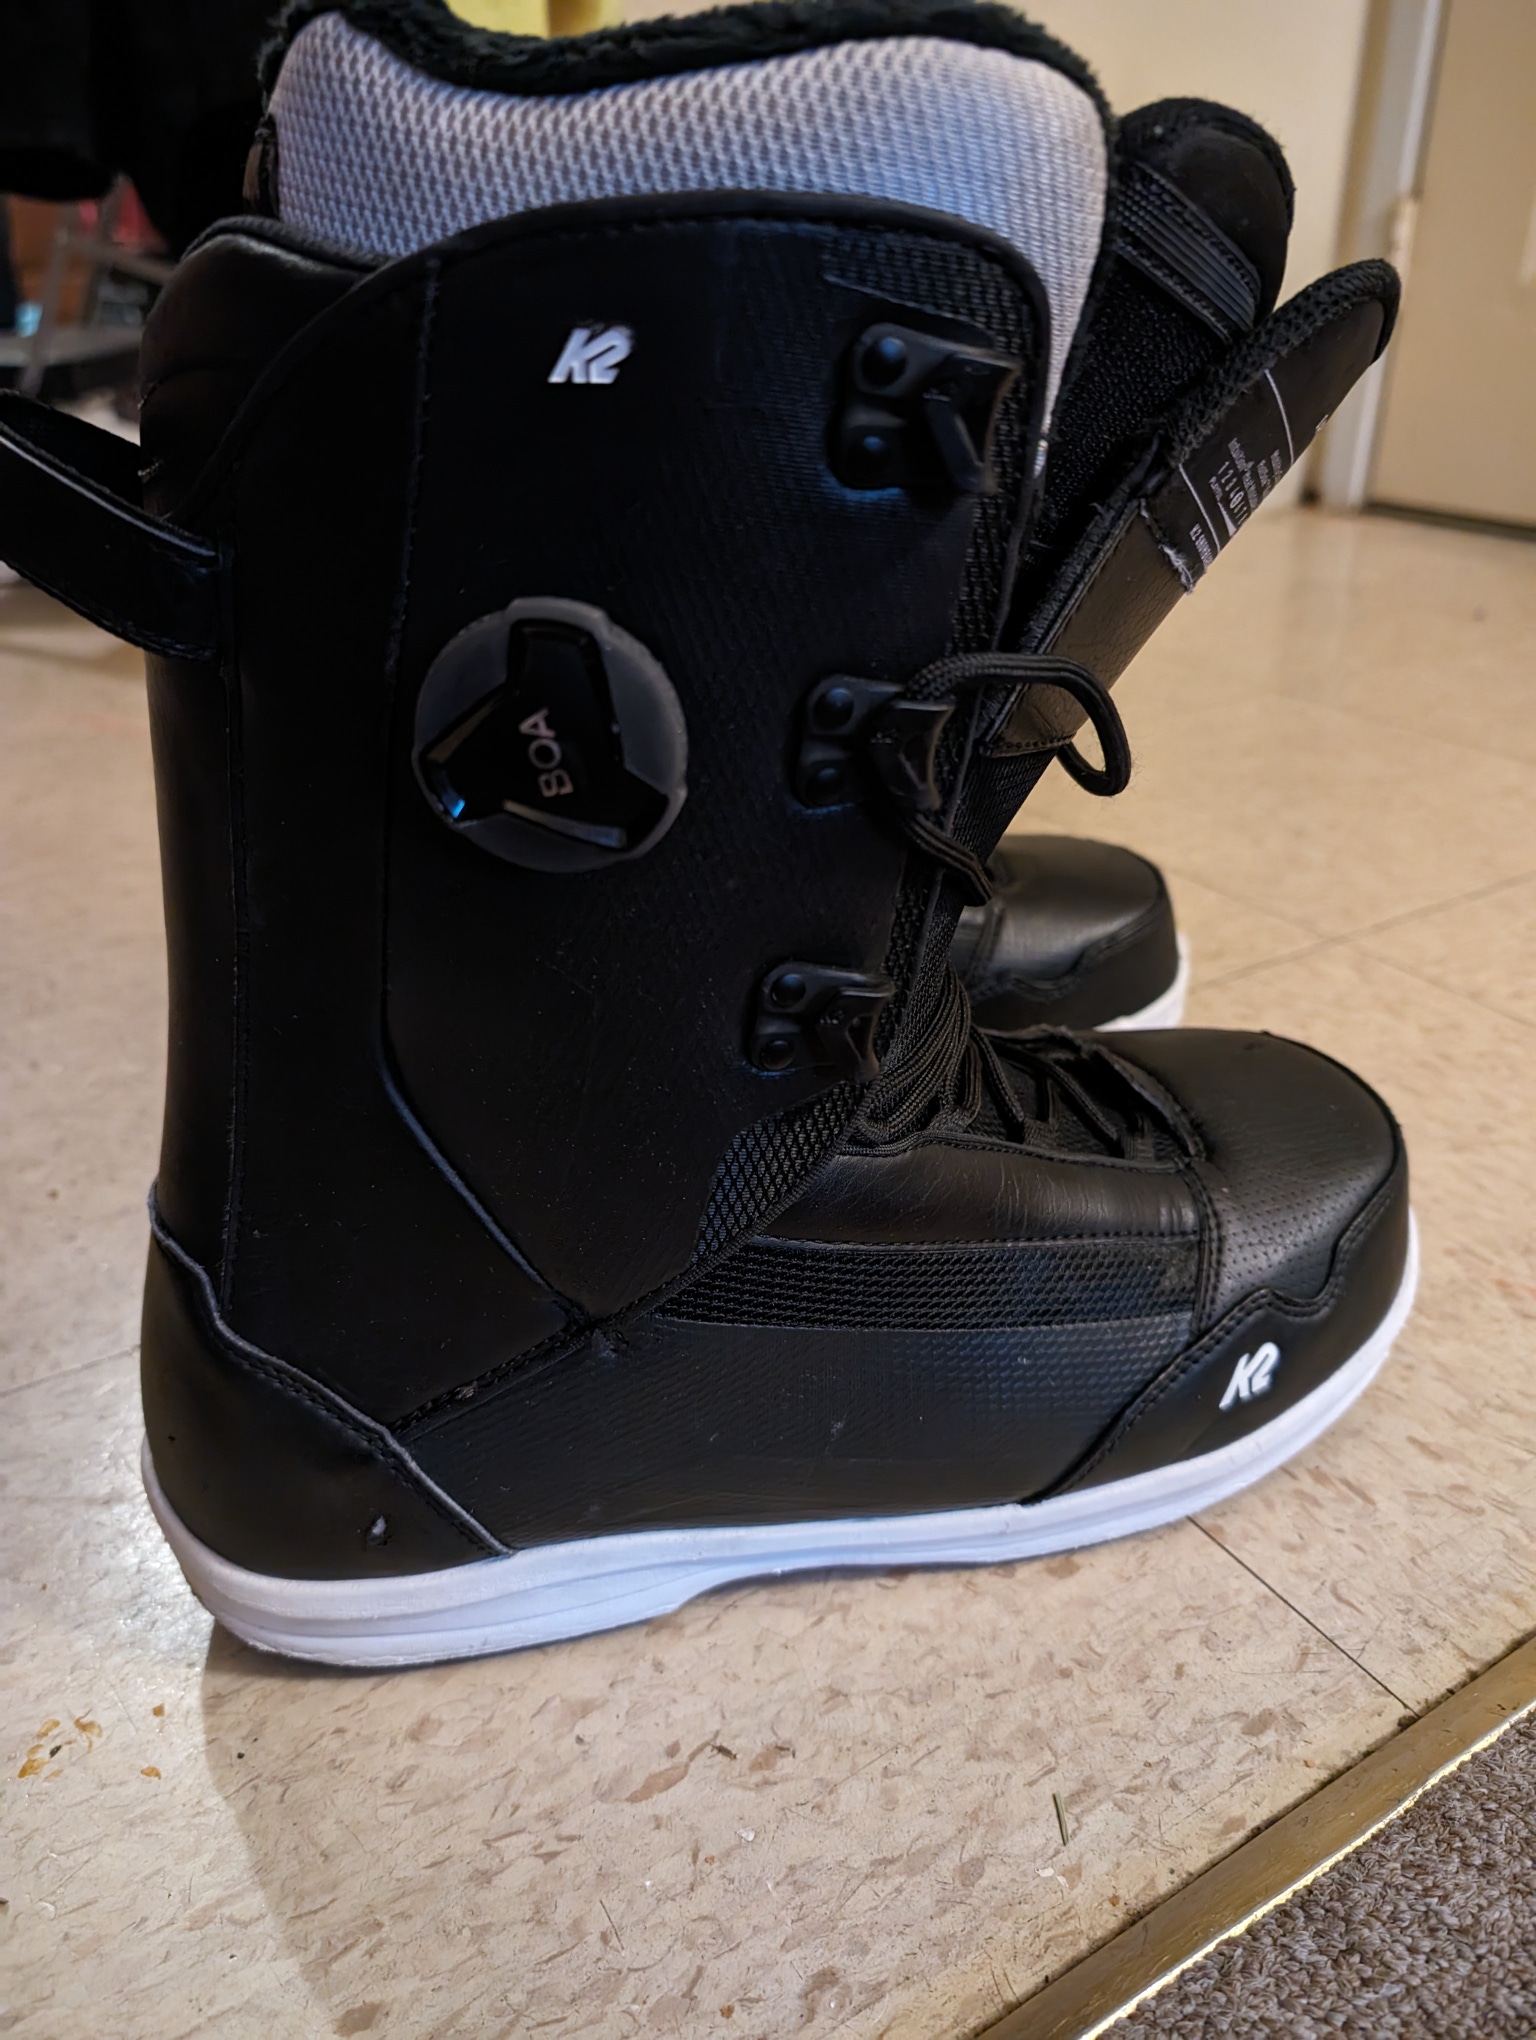 Men's Used Size 12 (Women's 13) K2 Darko Snowboard Boots Adjustable Flex Freestyle